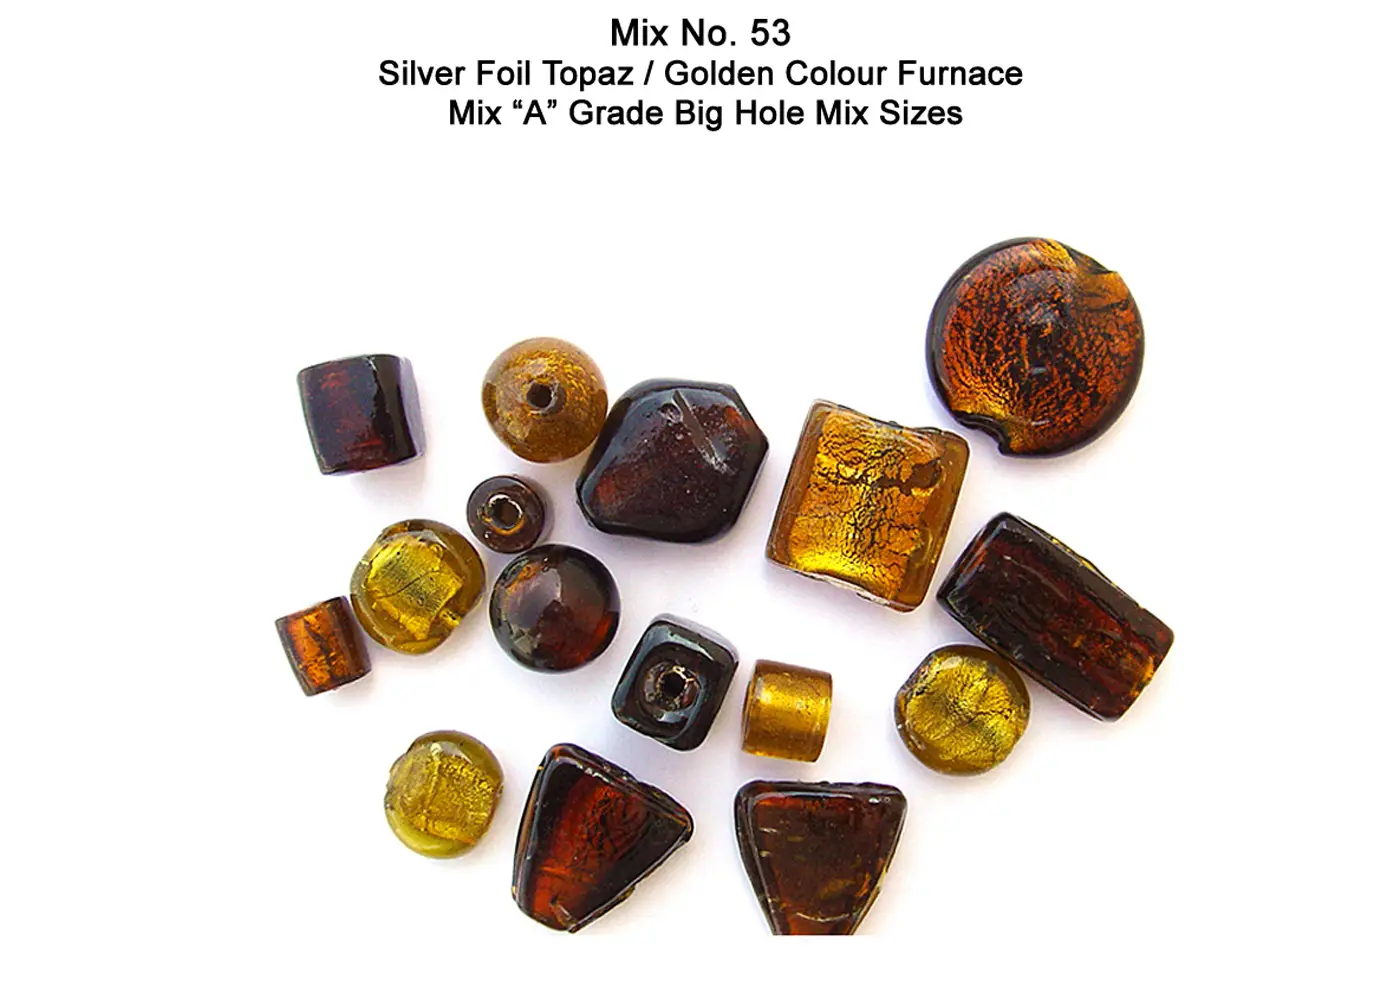 Silver Foil Topaz / Golden Color Furnace Mix "A" Grade Big Hole mix sizes